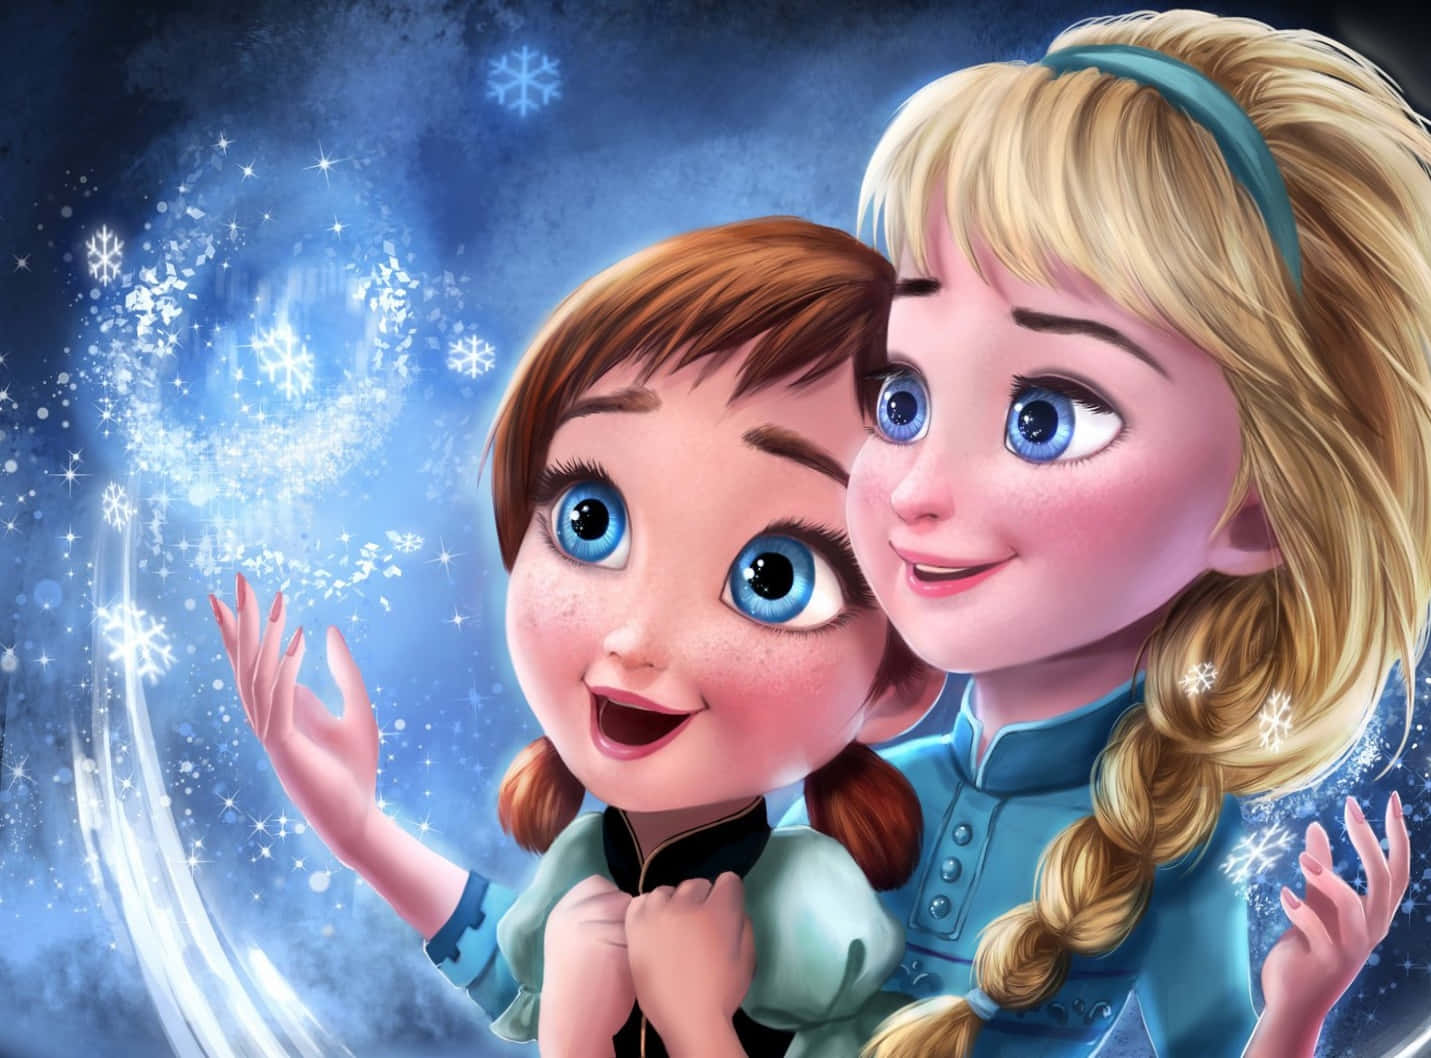 Sorelleper Sempre - Elsa E Anna Di Frozen Di Disney